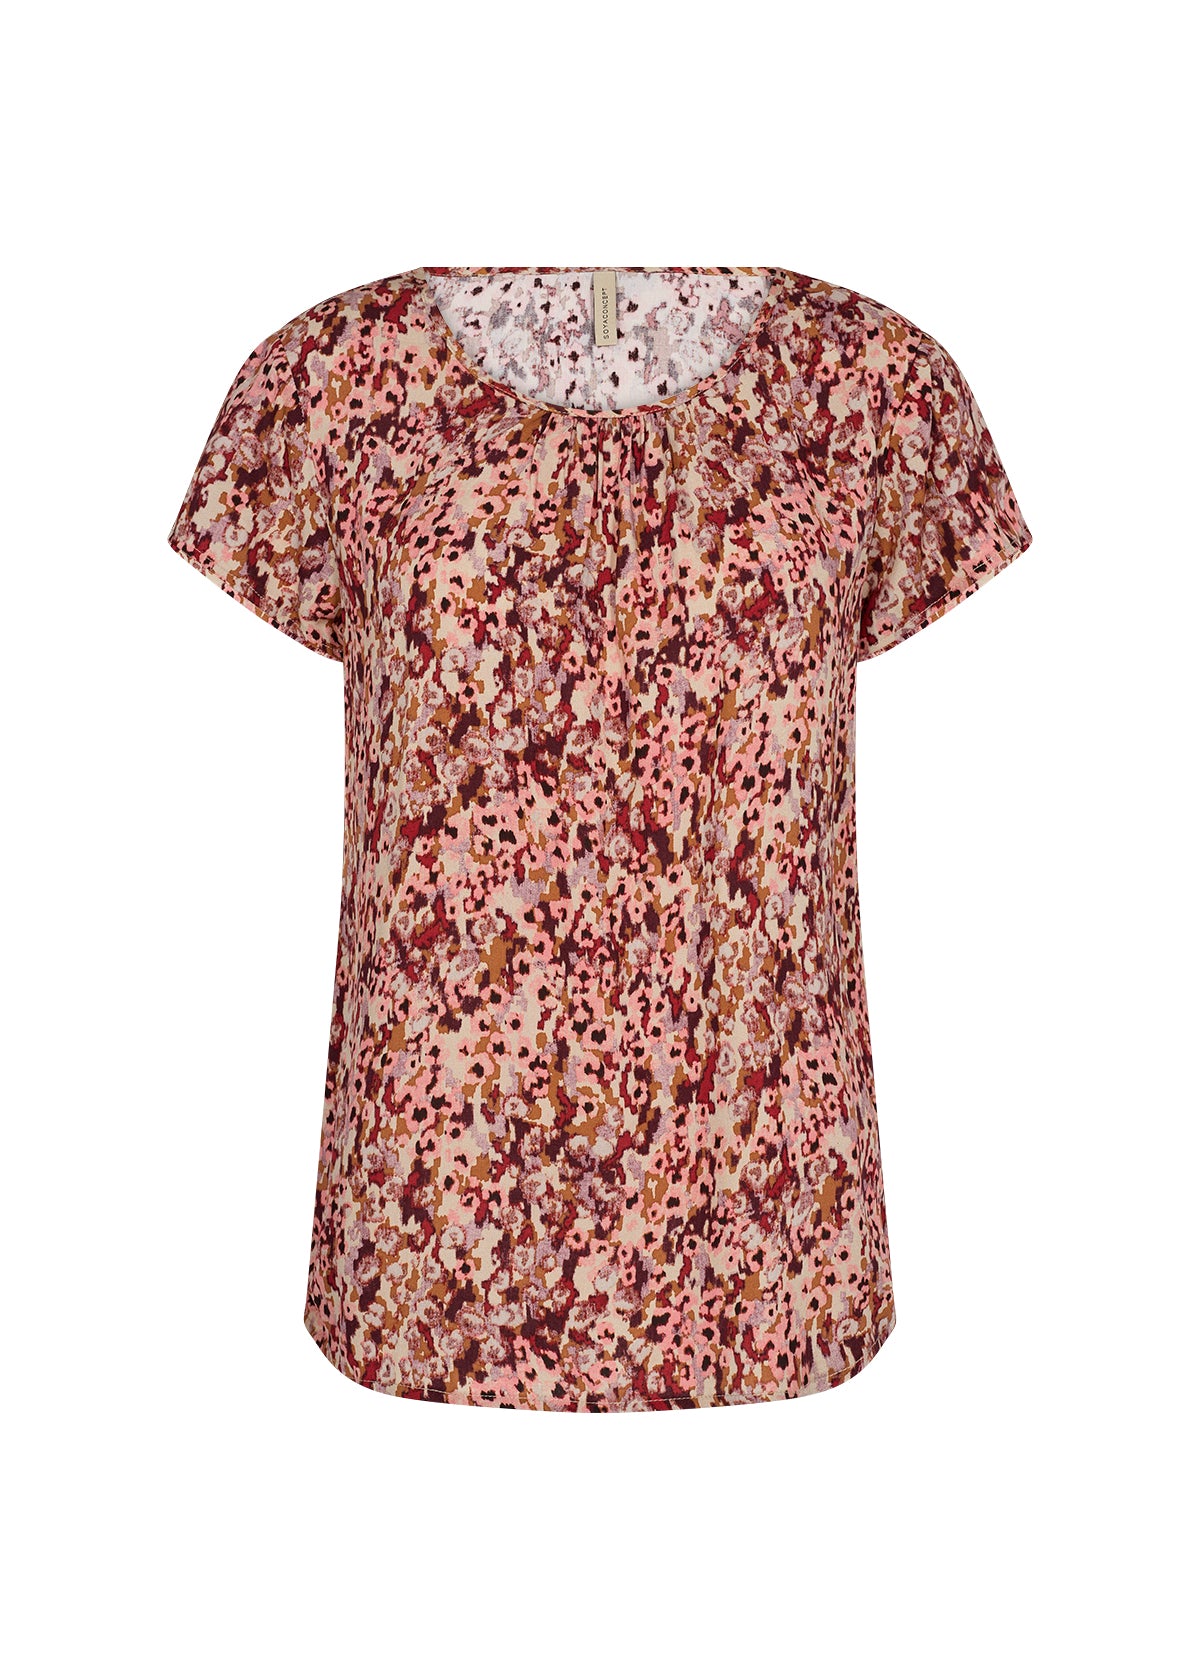 Soya Concept cap sleeve blouse